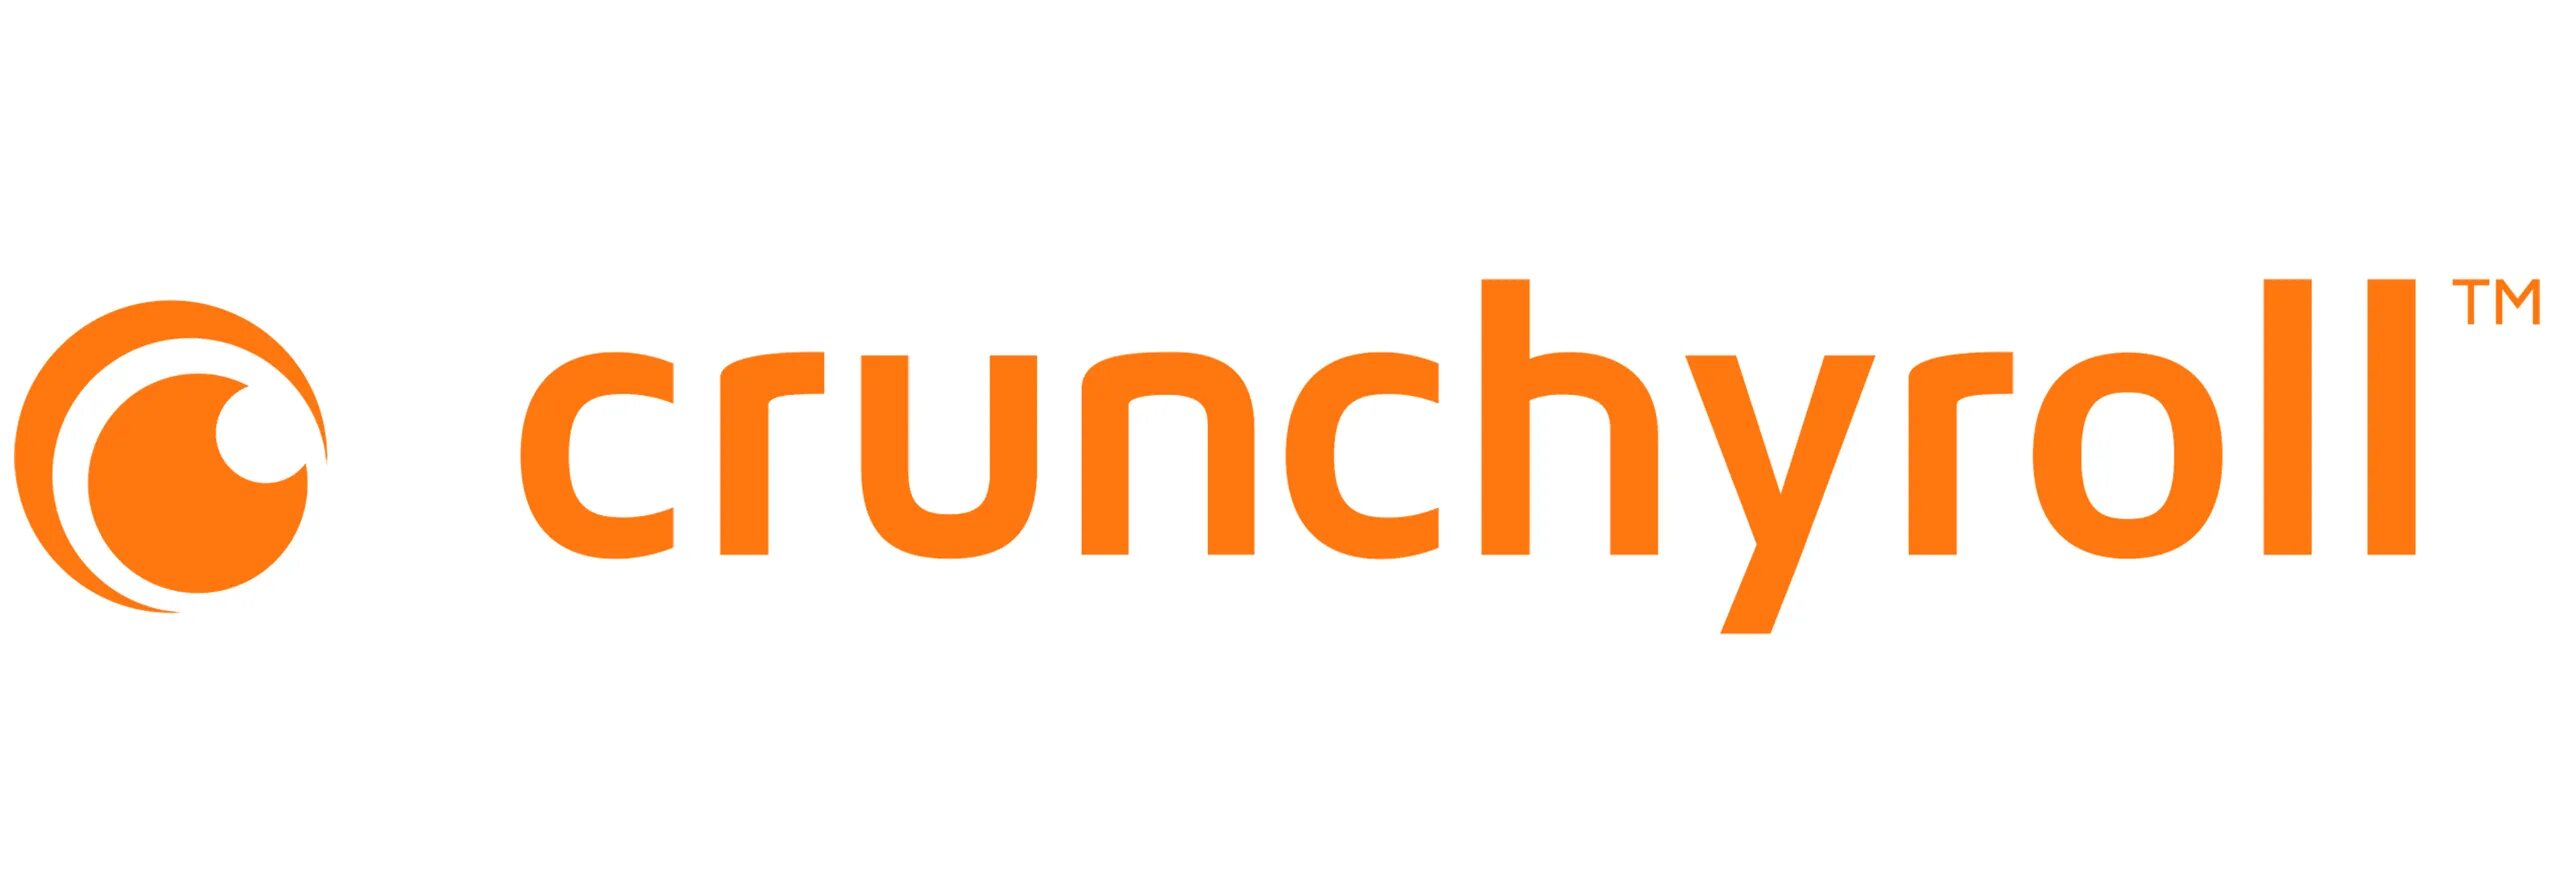 Кранчи ролл. КРАНЧИРОЛЛ. Crunchyroll logo. Crunchyroll collection лого.